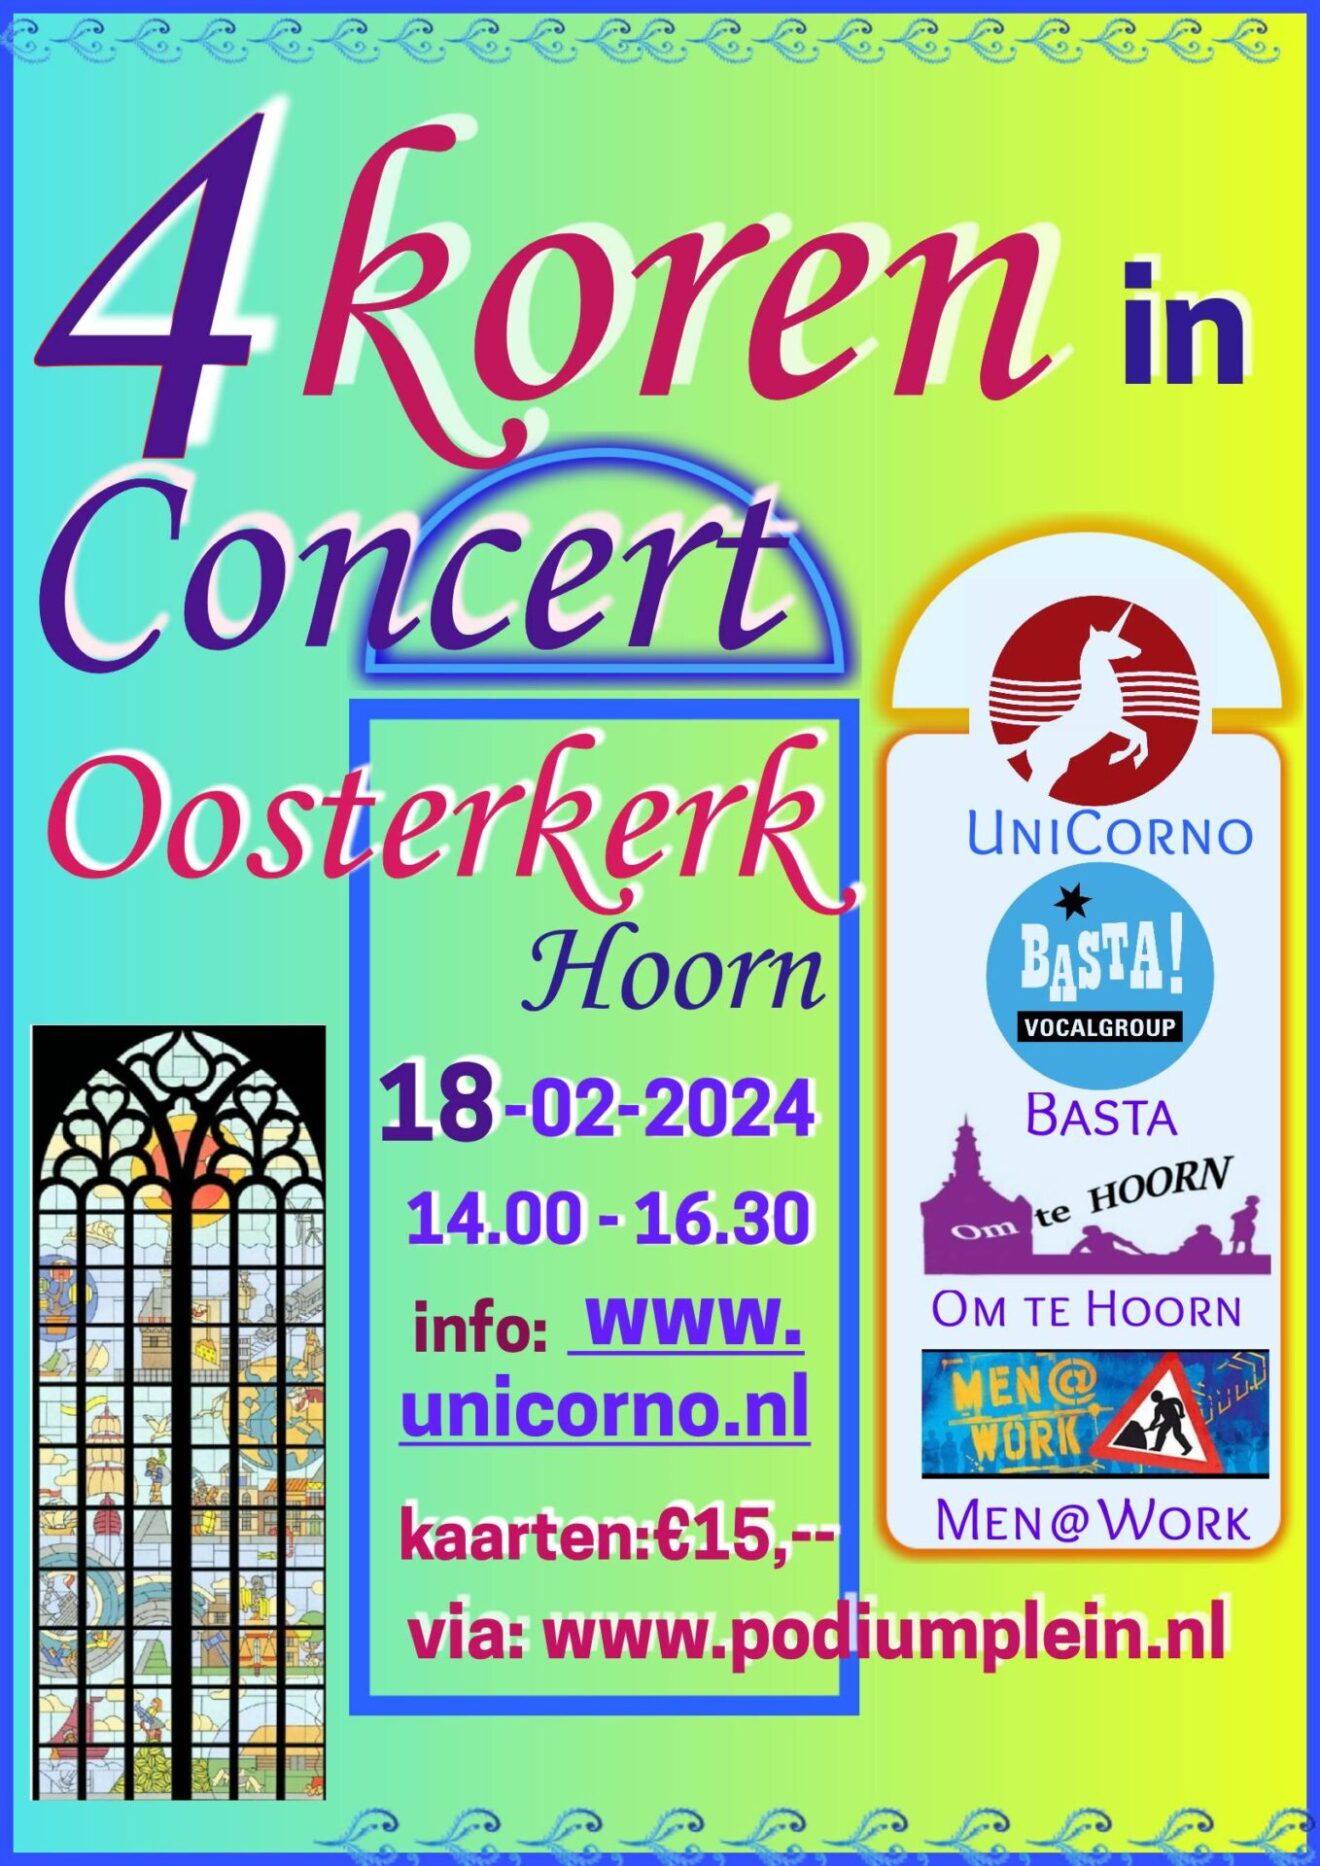 4 koren in concert: Unicorno, Basta, Om te Hoorn, Men@work